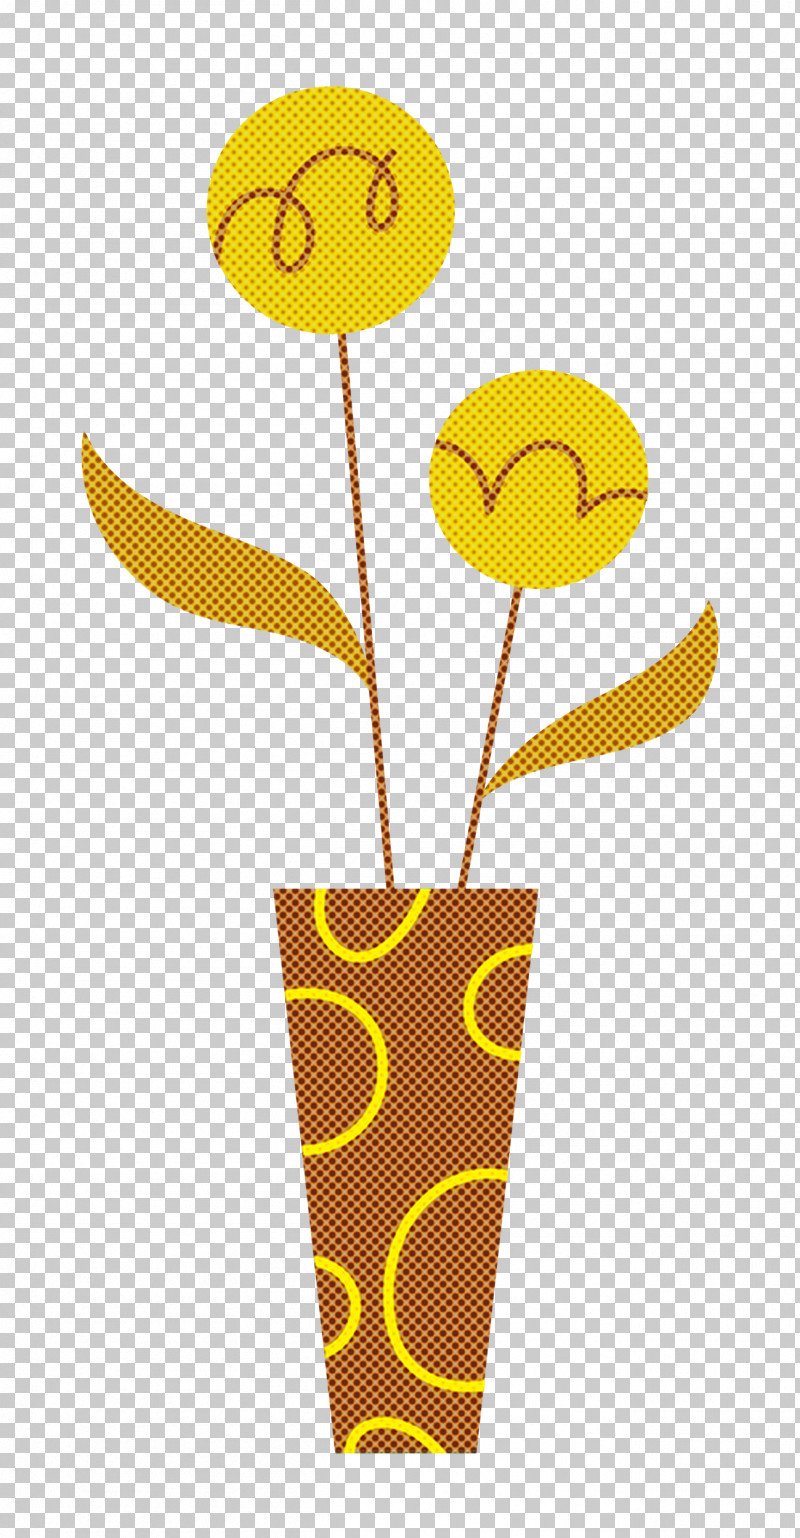 Flower Cut Flowers Flowerpot Yellow Sunflower / M PNG, Clipart, Cut Flowers, Flower, Flowerpot, Geometry, Line Free PNG Download